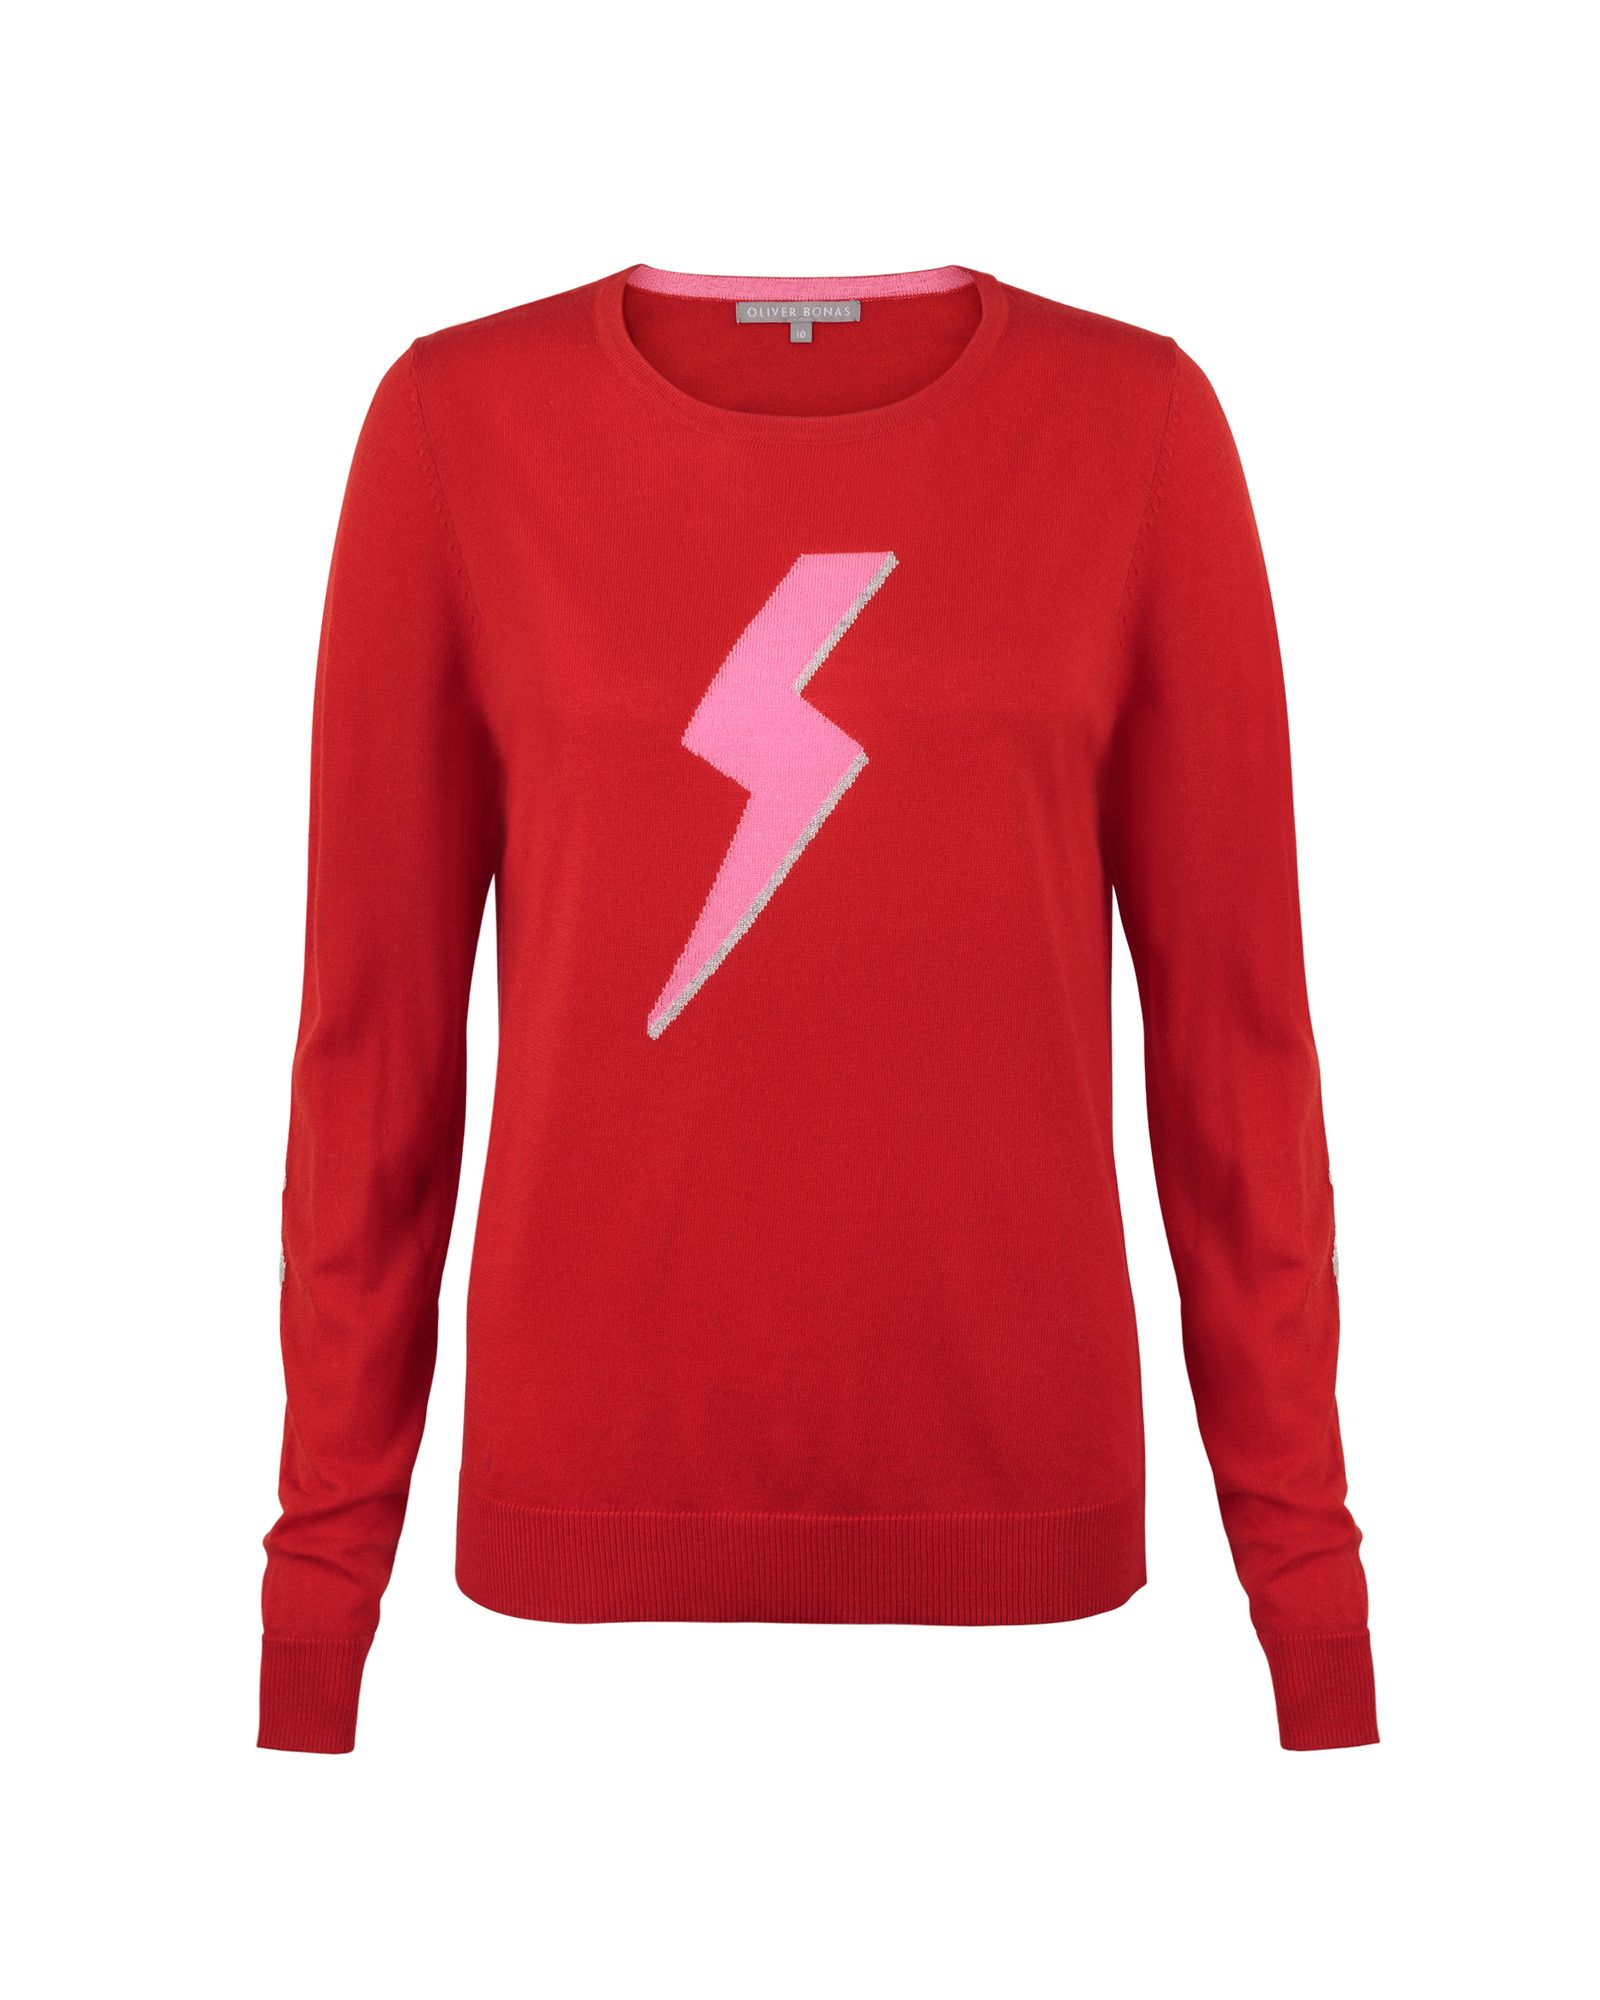 Lightning Bolt Red Jumper | Oliver Bonas